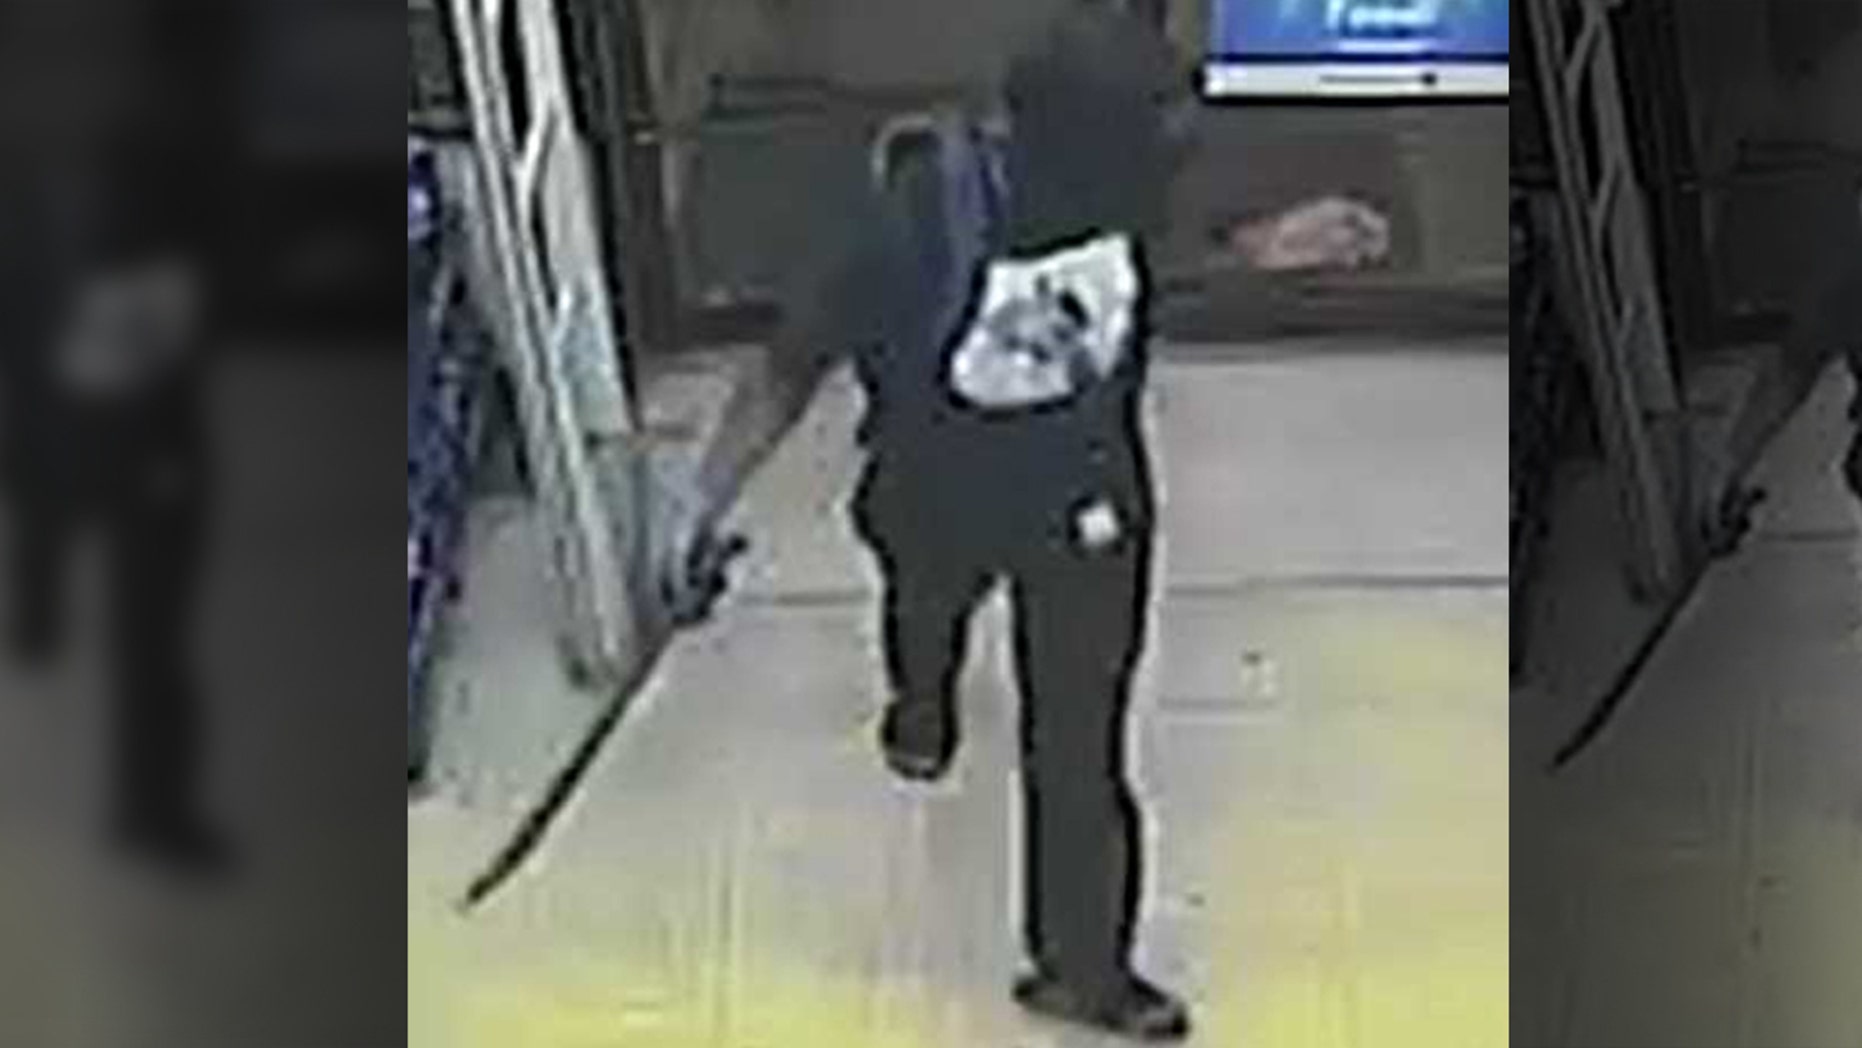 Two masked men burst into a Family Dollar in Birmingham, Ala., last week, police said.